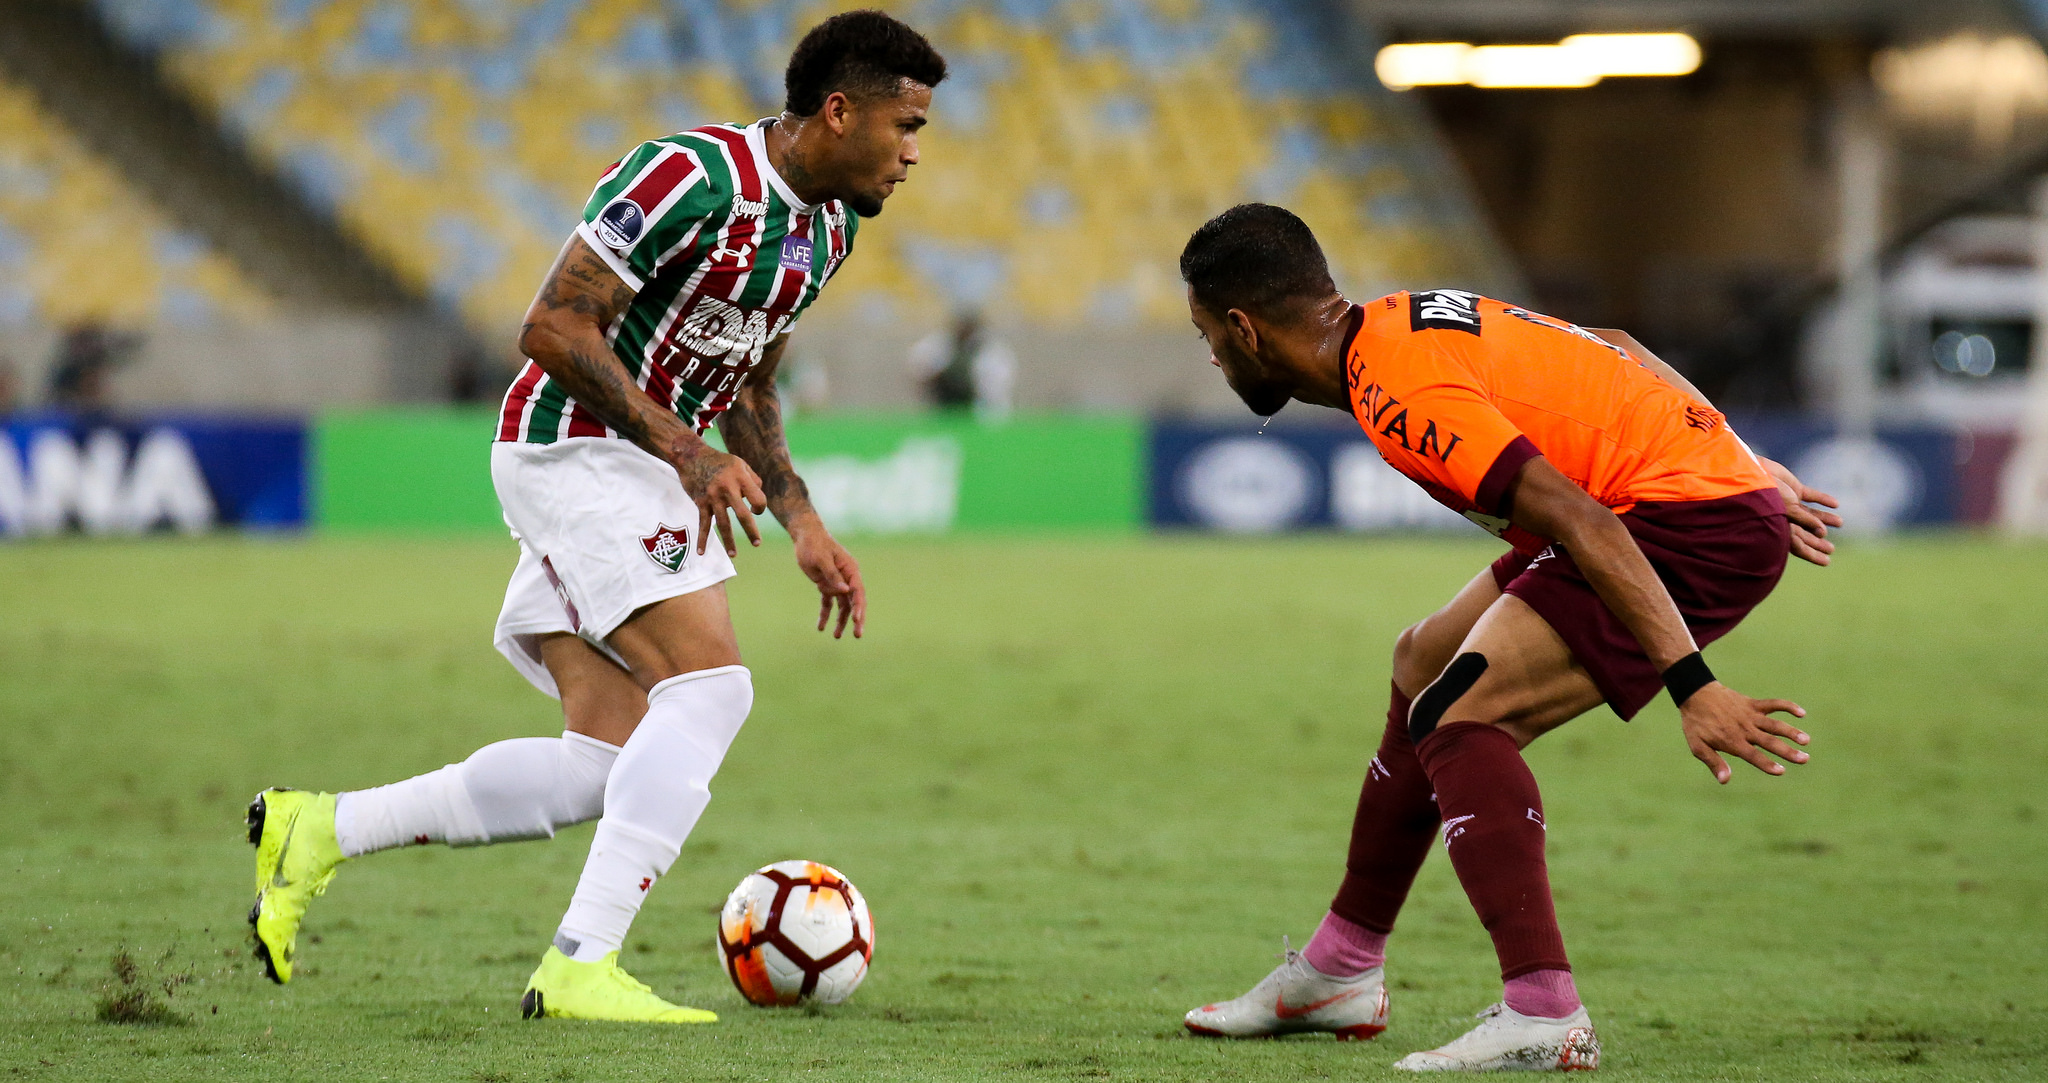 Soi kèo, nhận định Athletico Paranaense vs Fluminense 02h00 ngày 03/06/2019